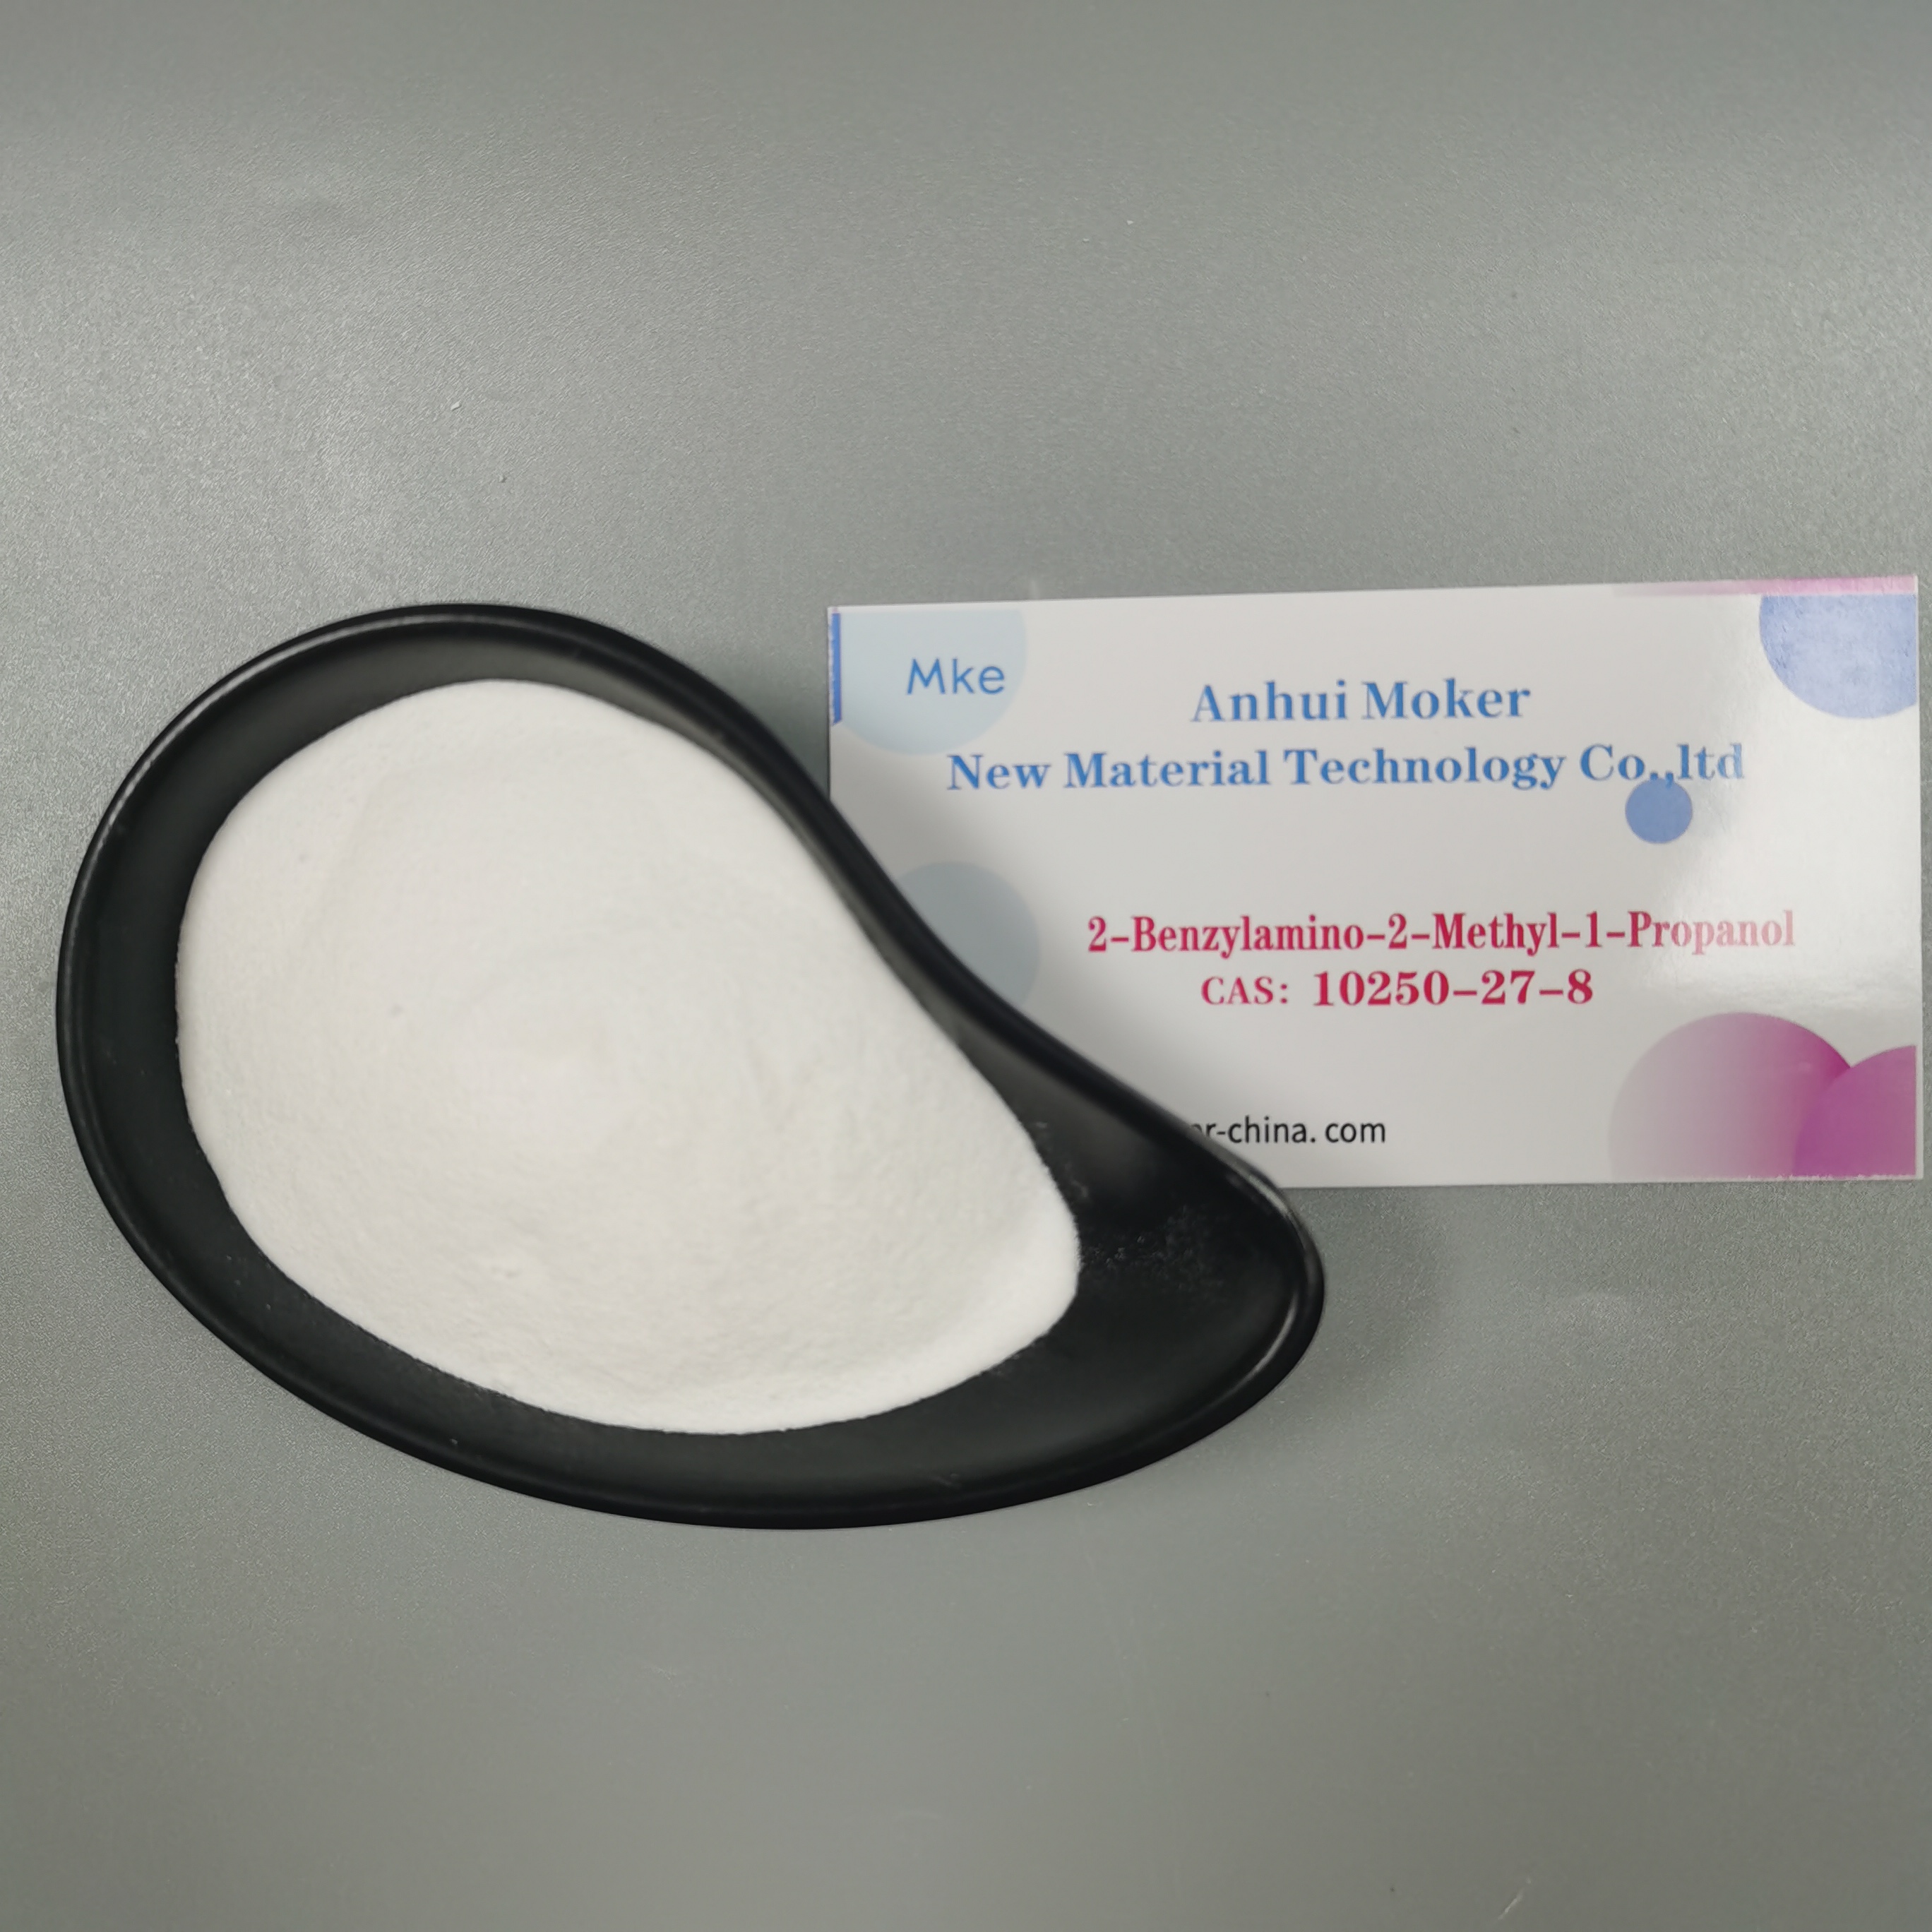 Powder High Quality BMK Glycidate For Research Chemical